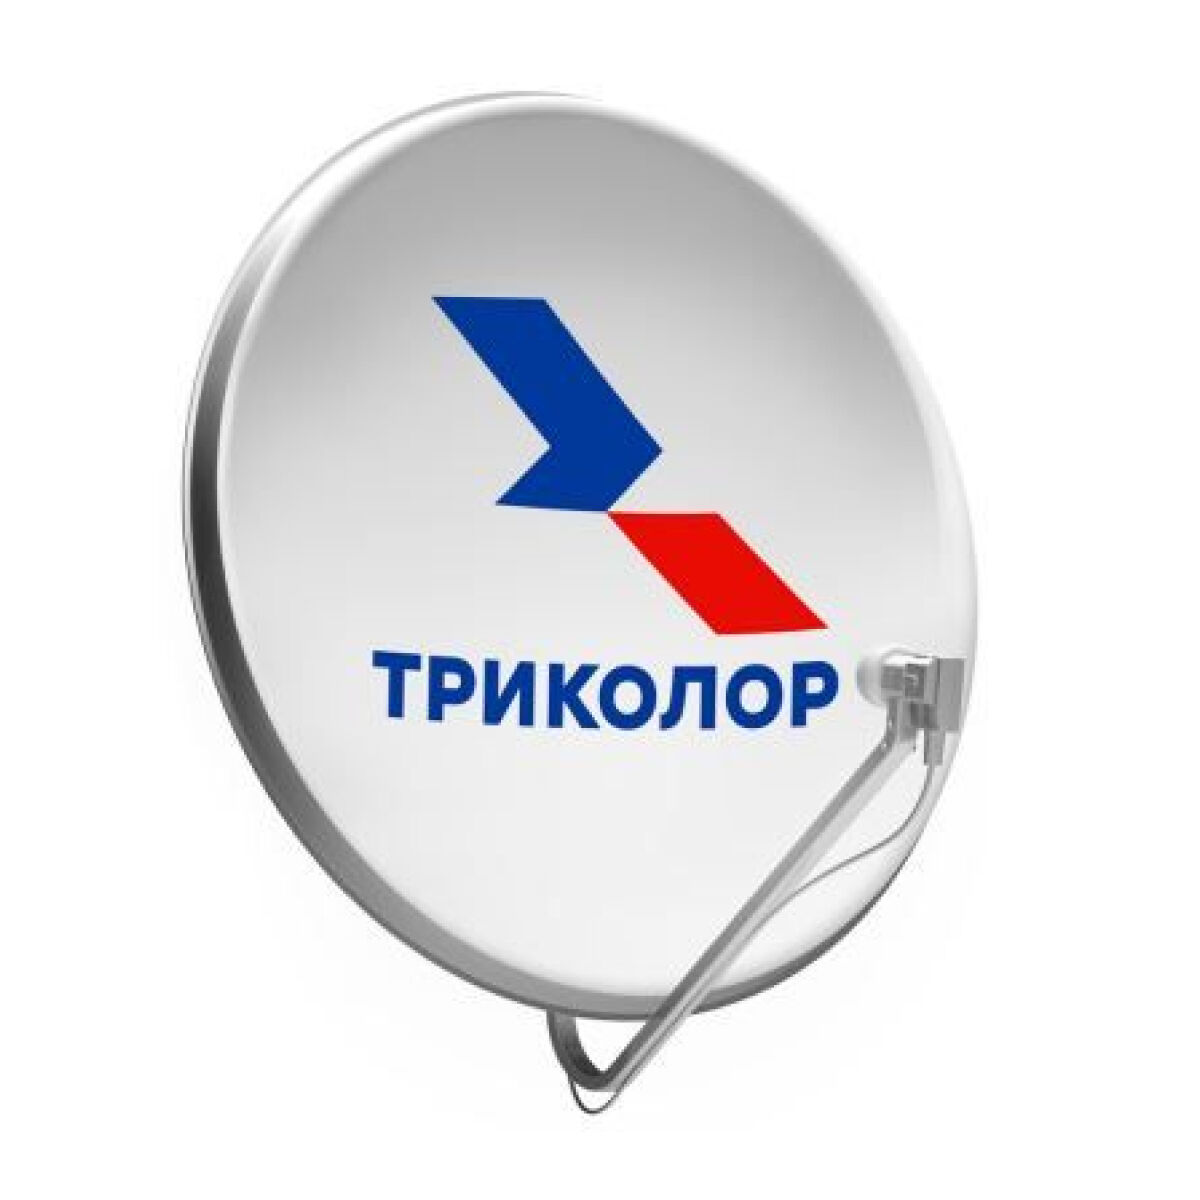 Антенна спутниковая офсетная АУМ CTB-0.55-1.1 0.55 605 Logo St с лого Триколор